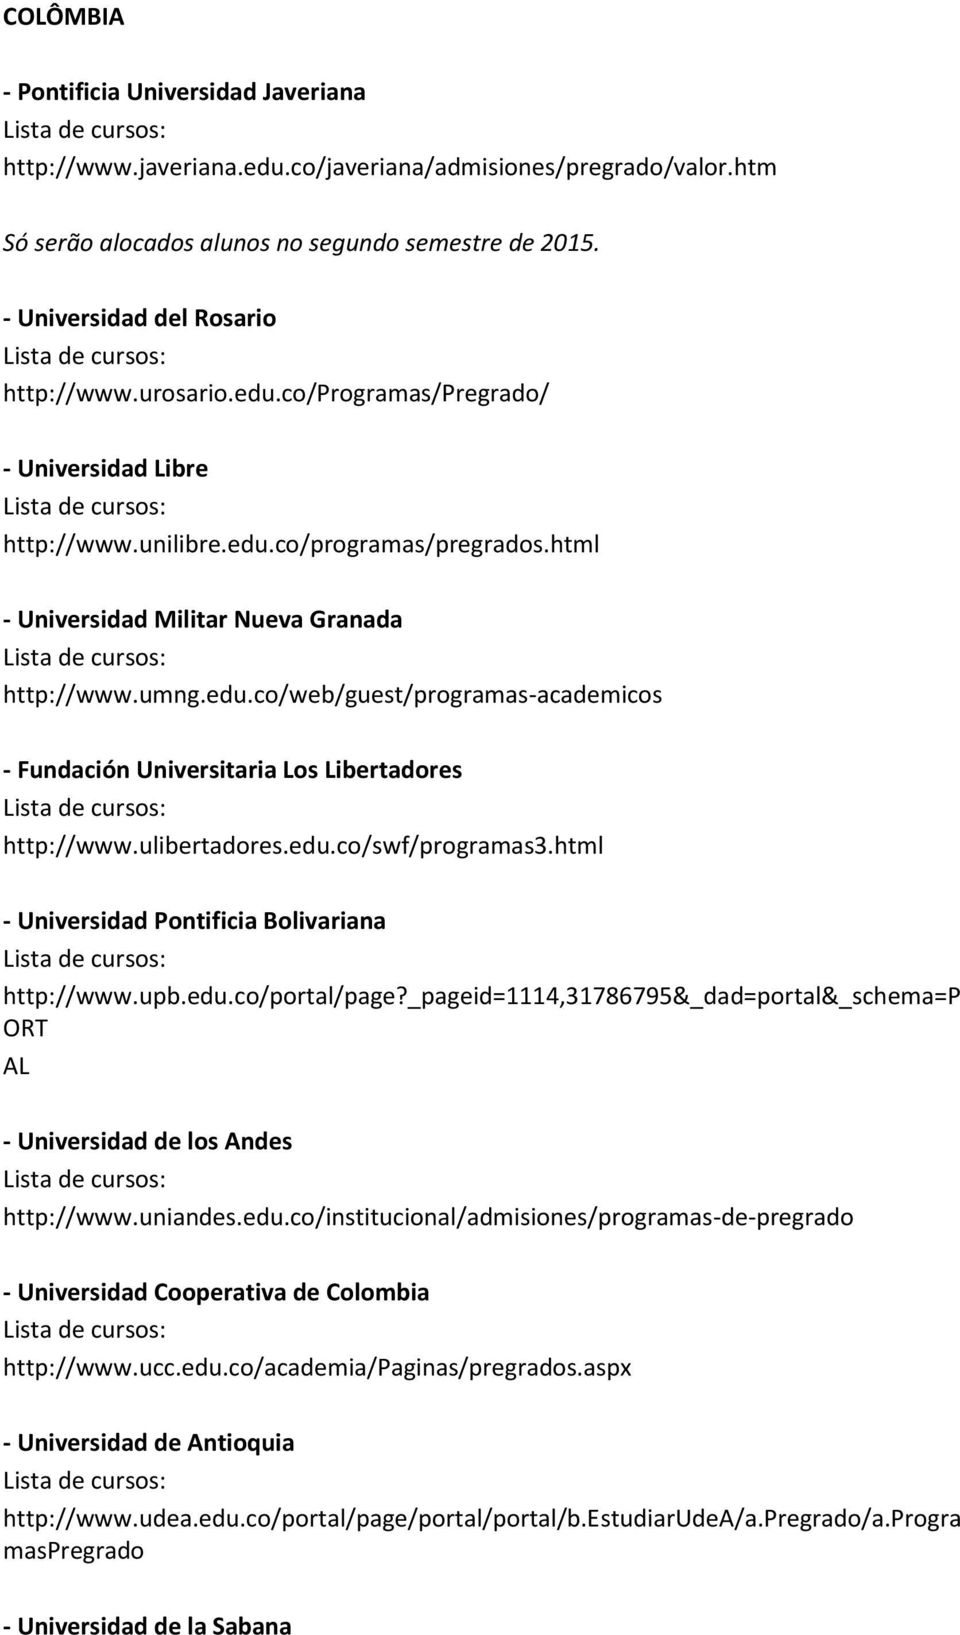 edu.co/web/guest/programas-academicos - Fundación Universitaria Los Libertadores http://www.ulibertadores.edu.co/swf/programas3.html - Universidad Pontificia Bolivariana http://www.upb.edu.co/portal/page?